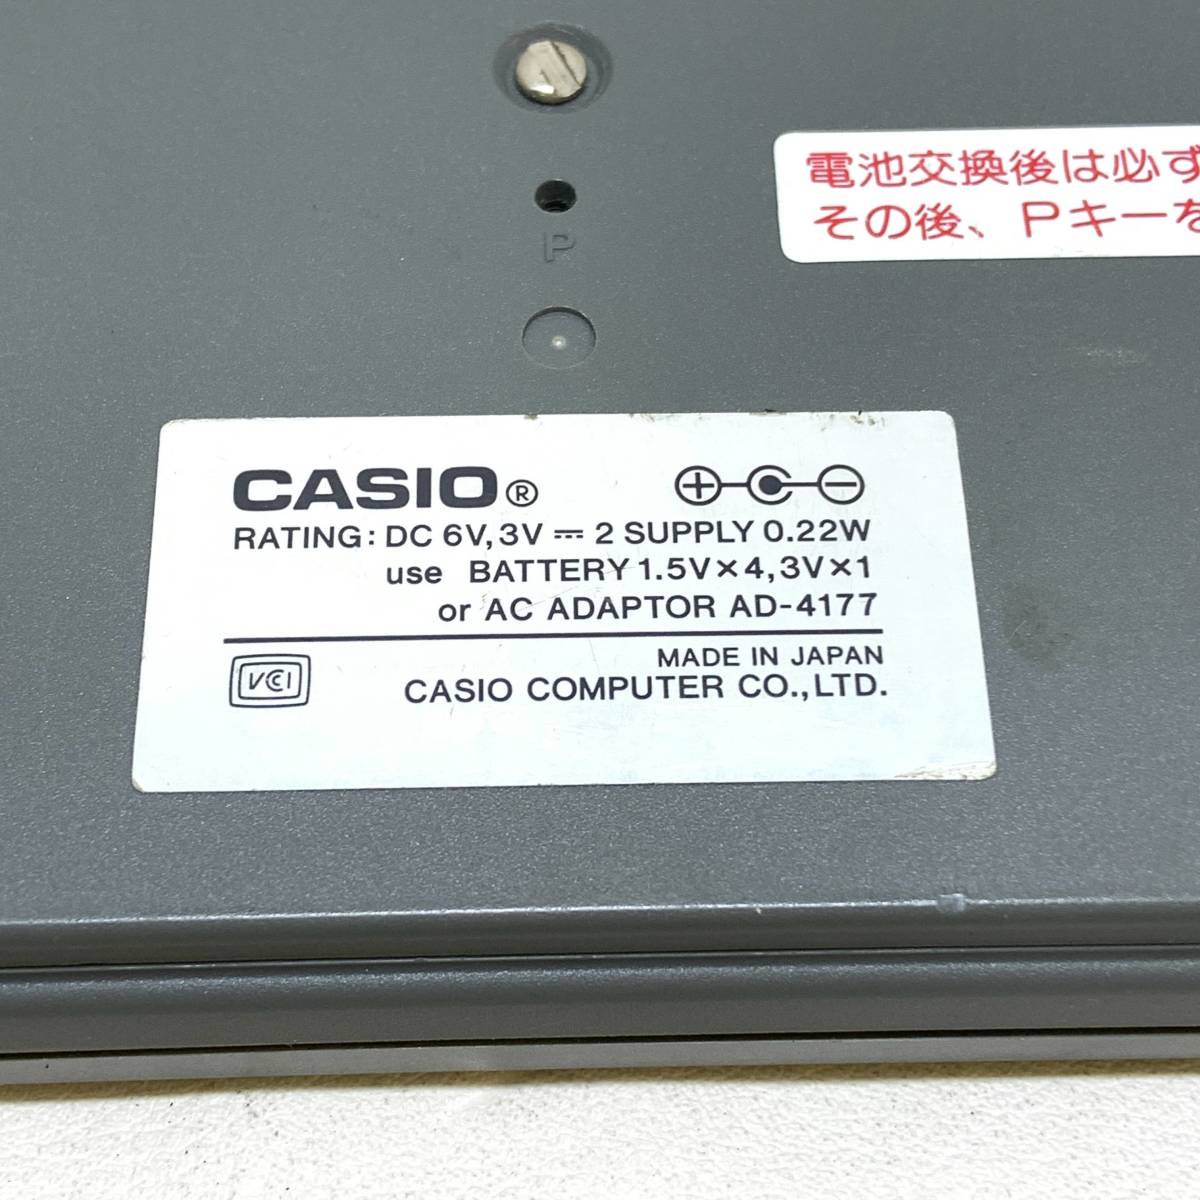 VCASIO Casio /SUPER COLLEGE PERSONAL CONPUTER карманный компьютер - карманный компьютер /Z-1/16-BitV